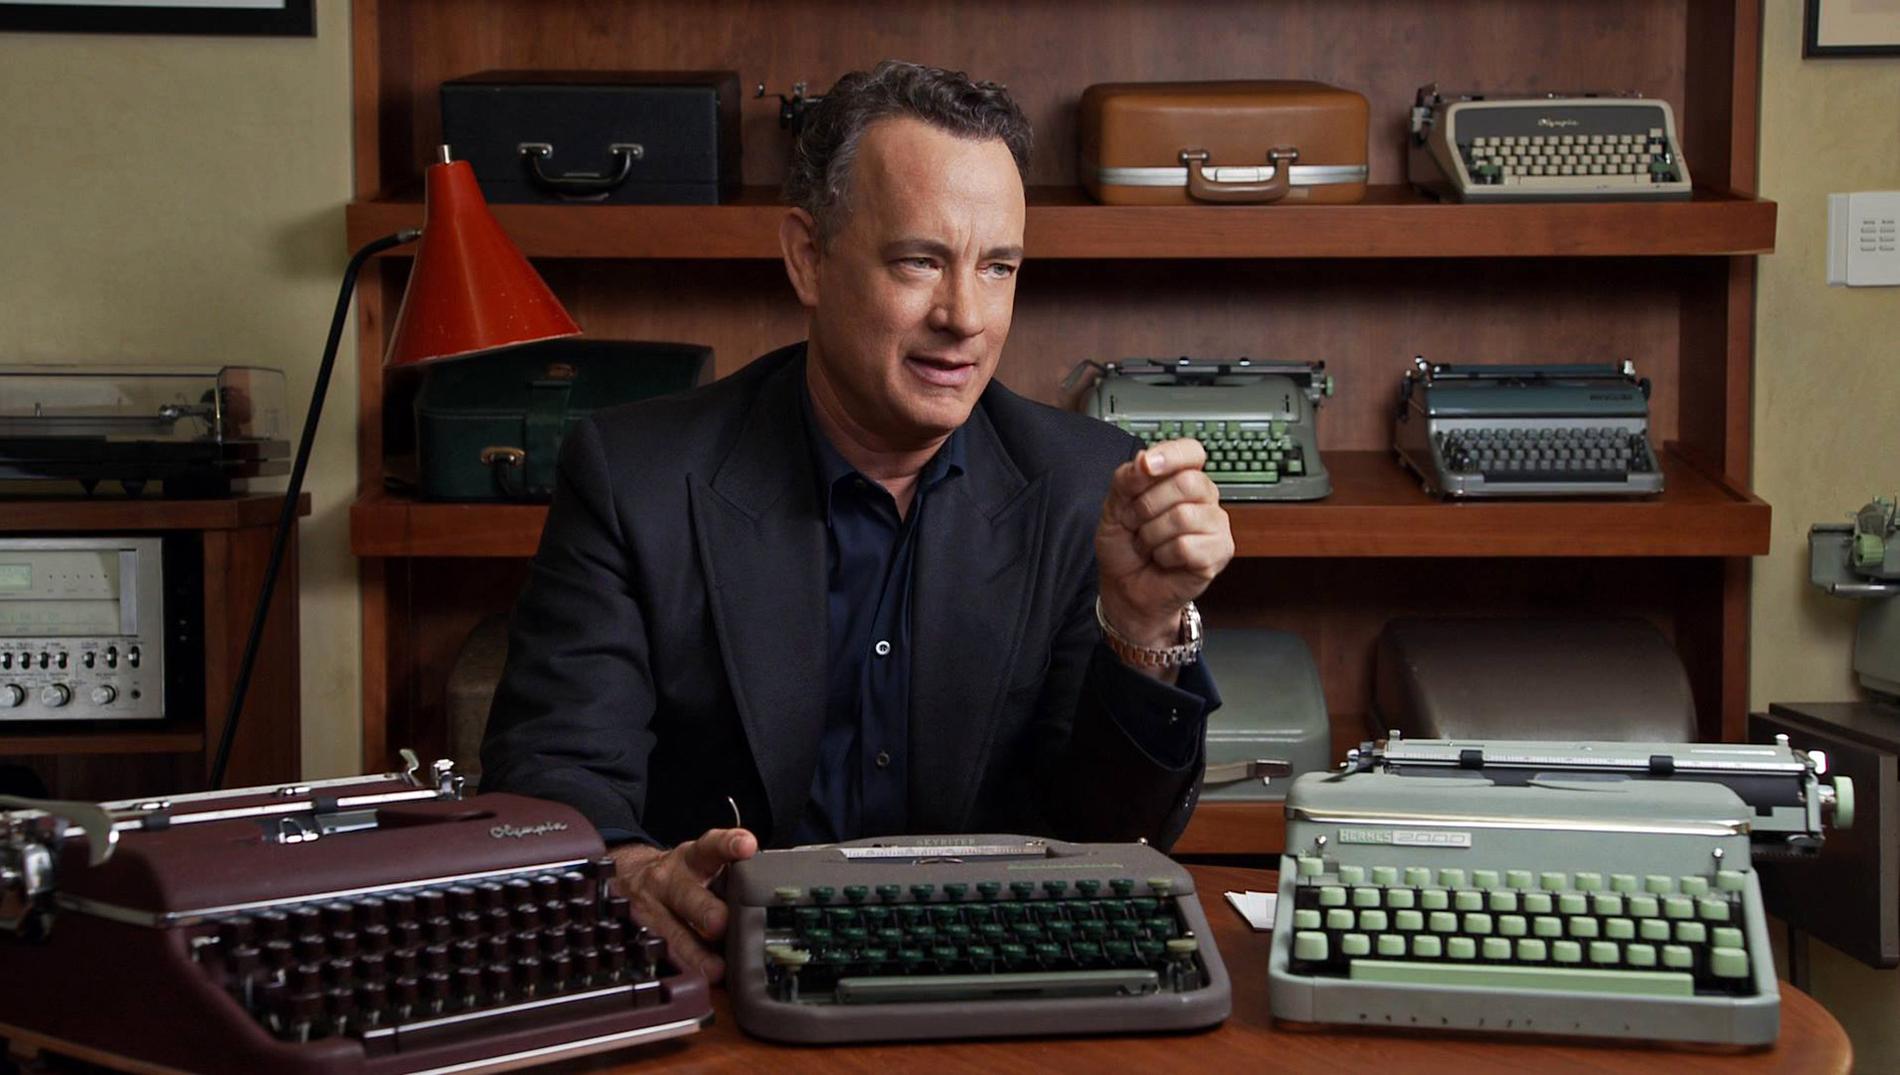 2016 medverkade Tom Hanks i dokumentären ”California typewriter”. 